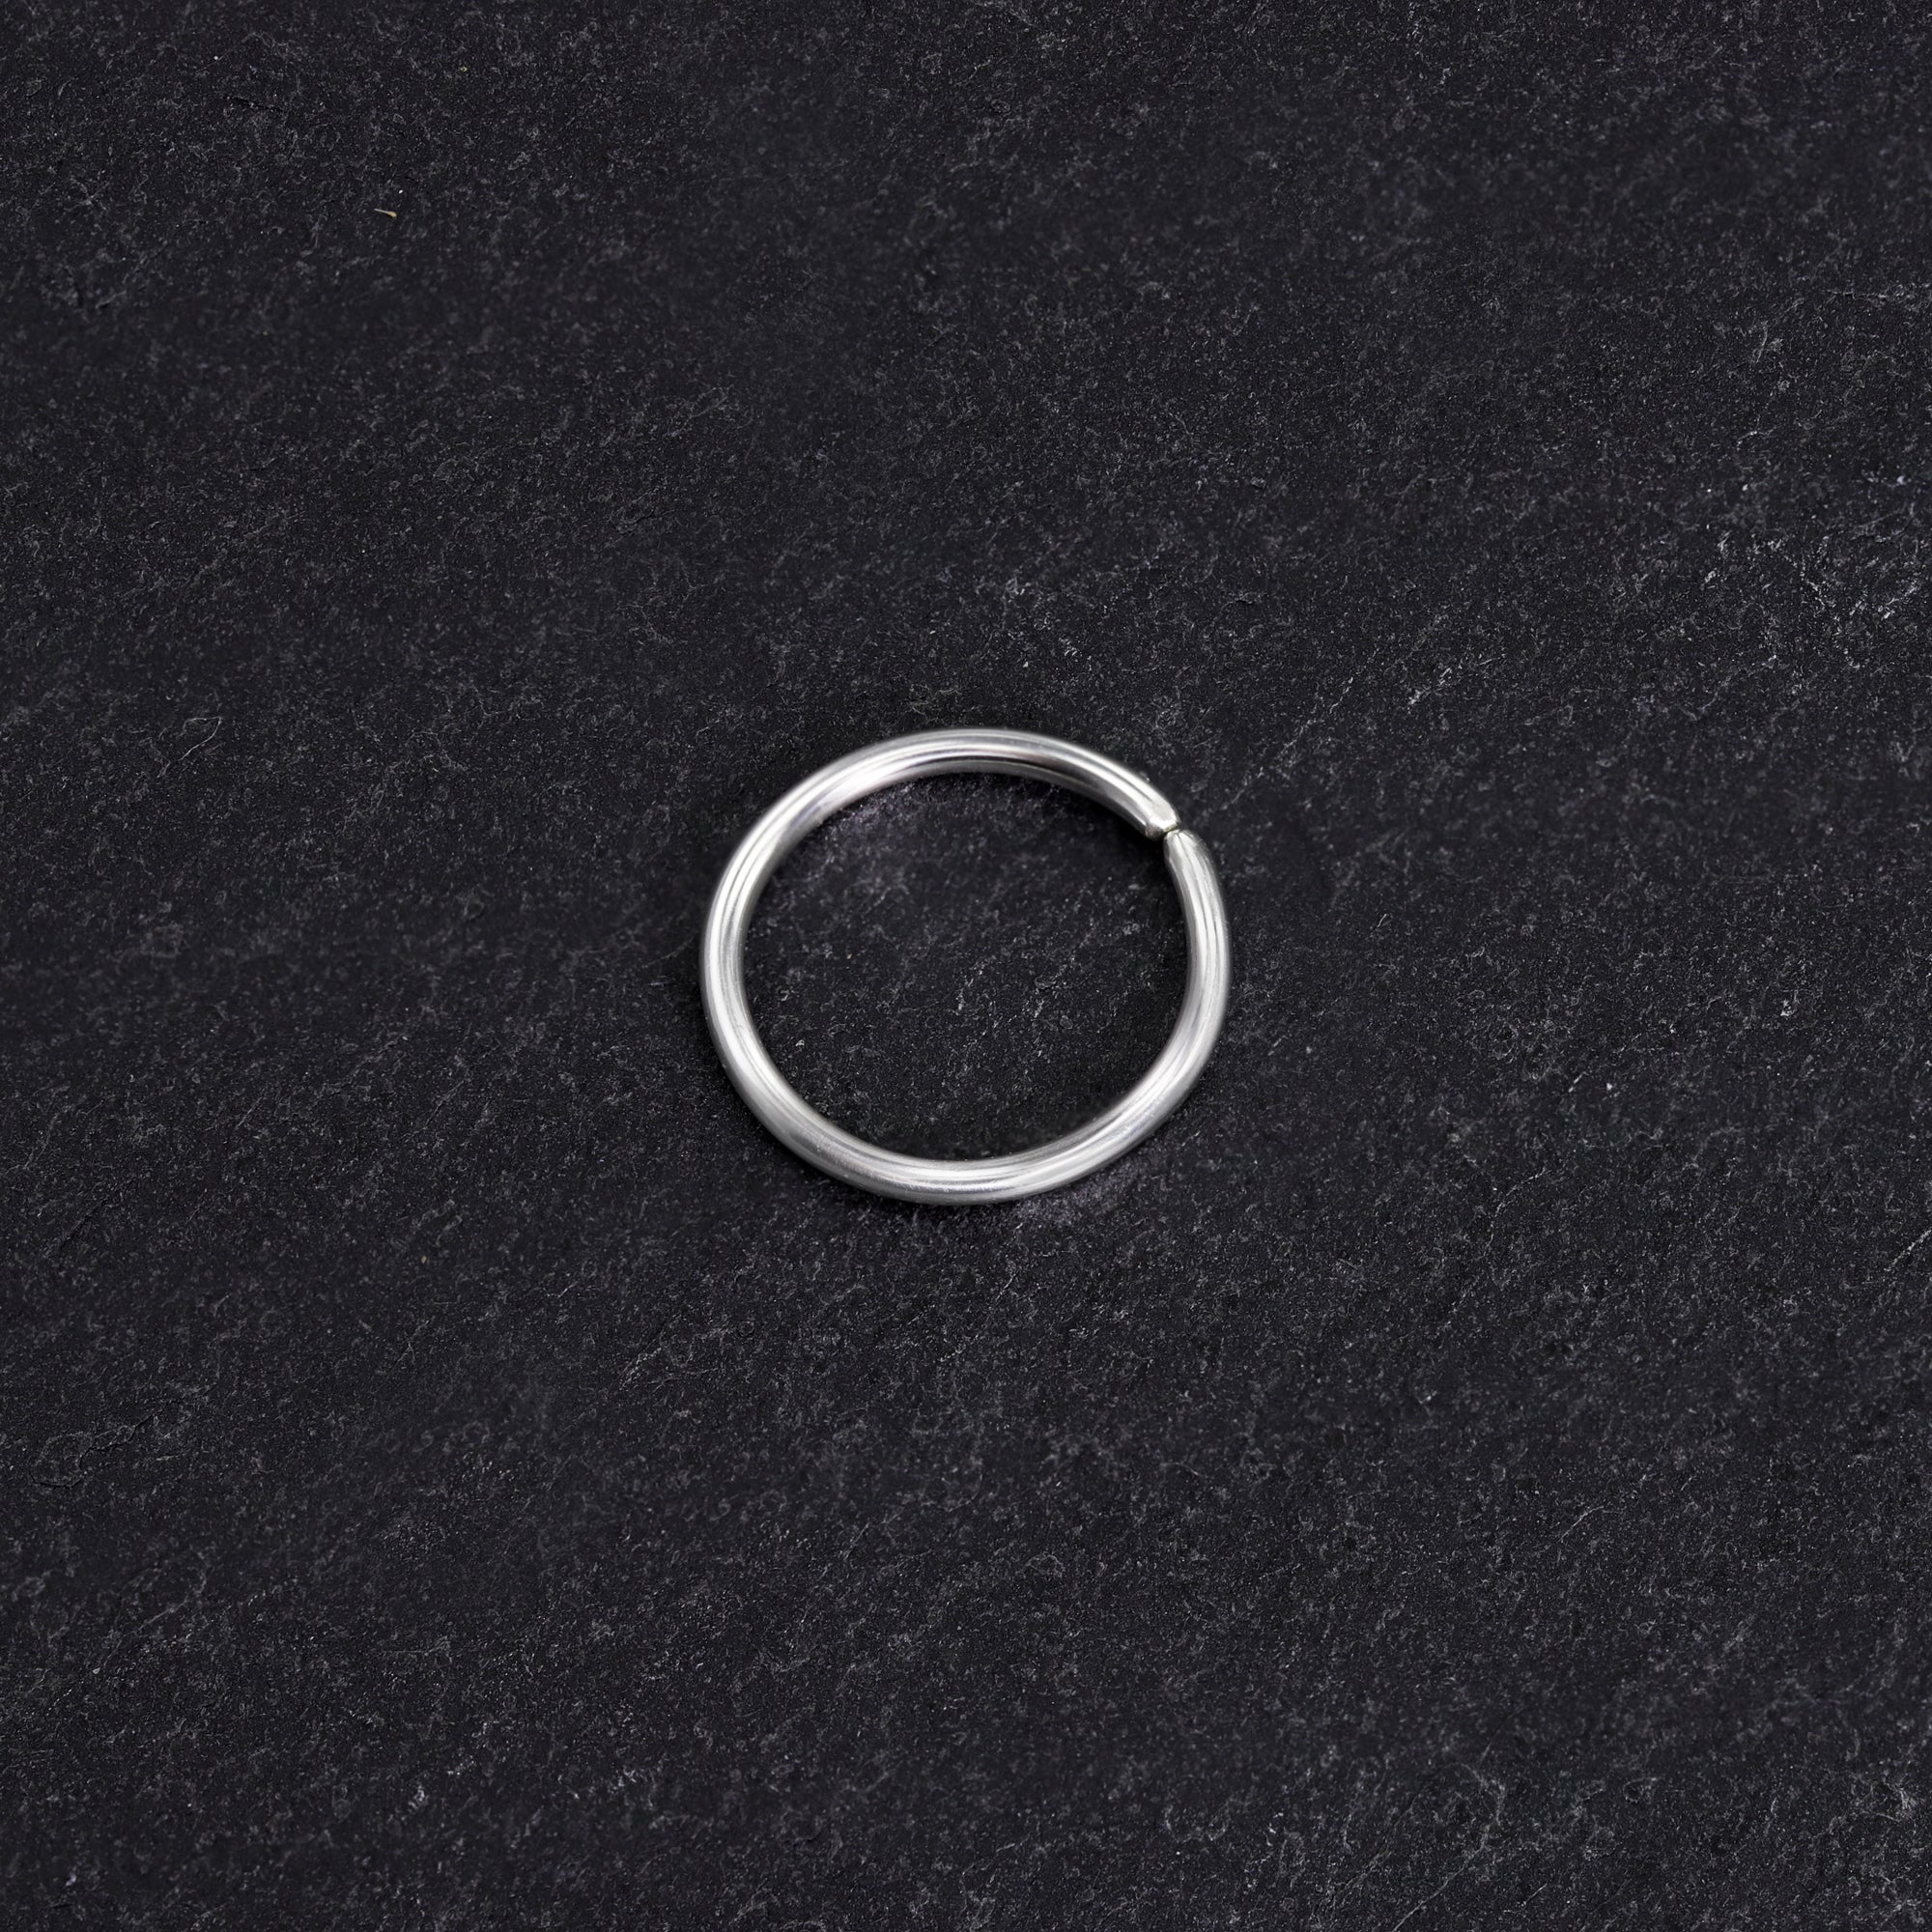 Sterling Silver Nose Ring - Small Basic Hoop | Nose Rings ... | Nose  piercing hoop, Silver nose ring, Nose rings hoop